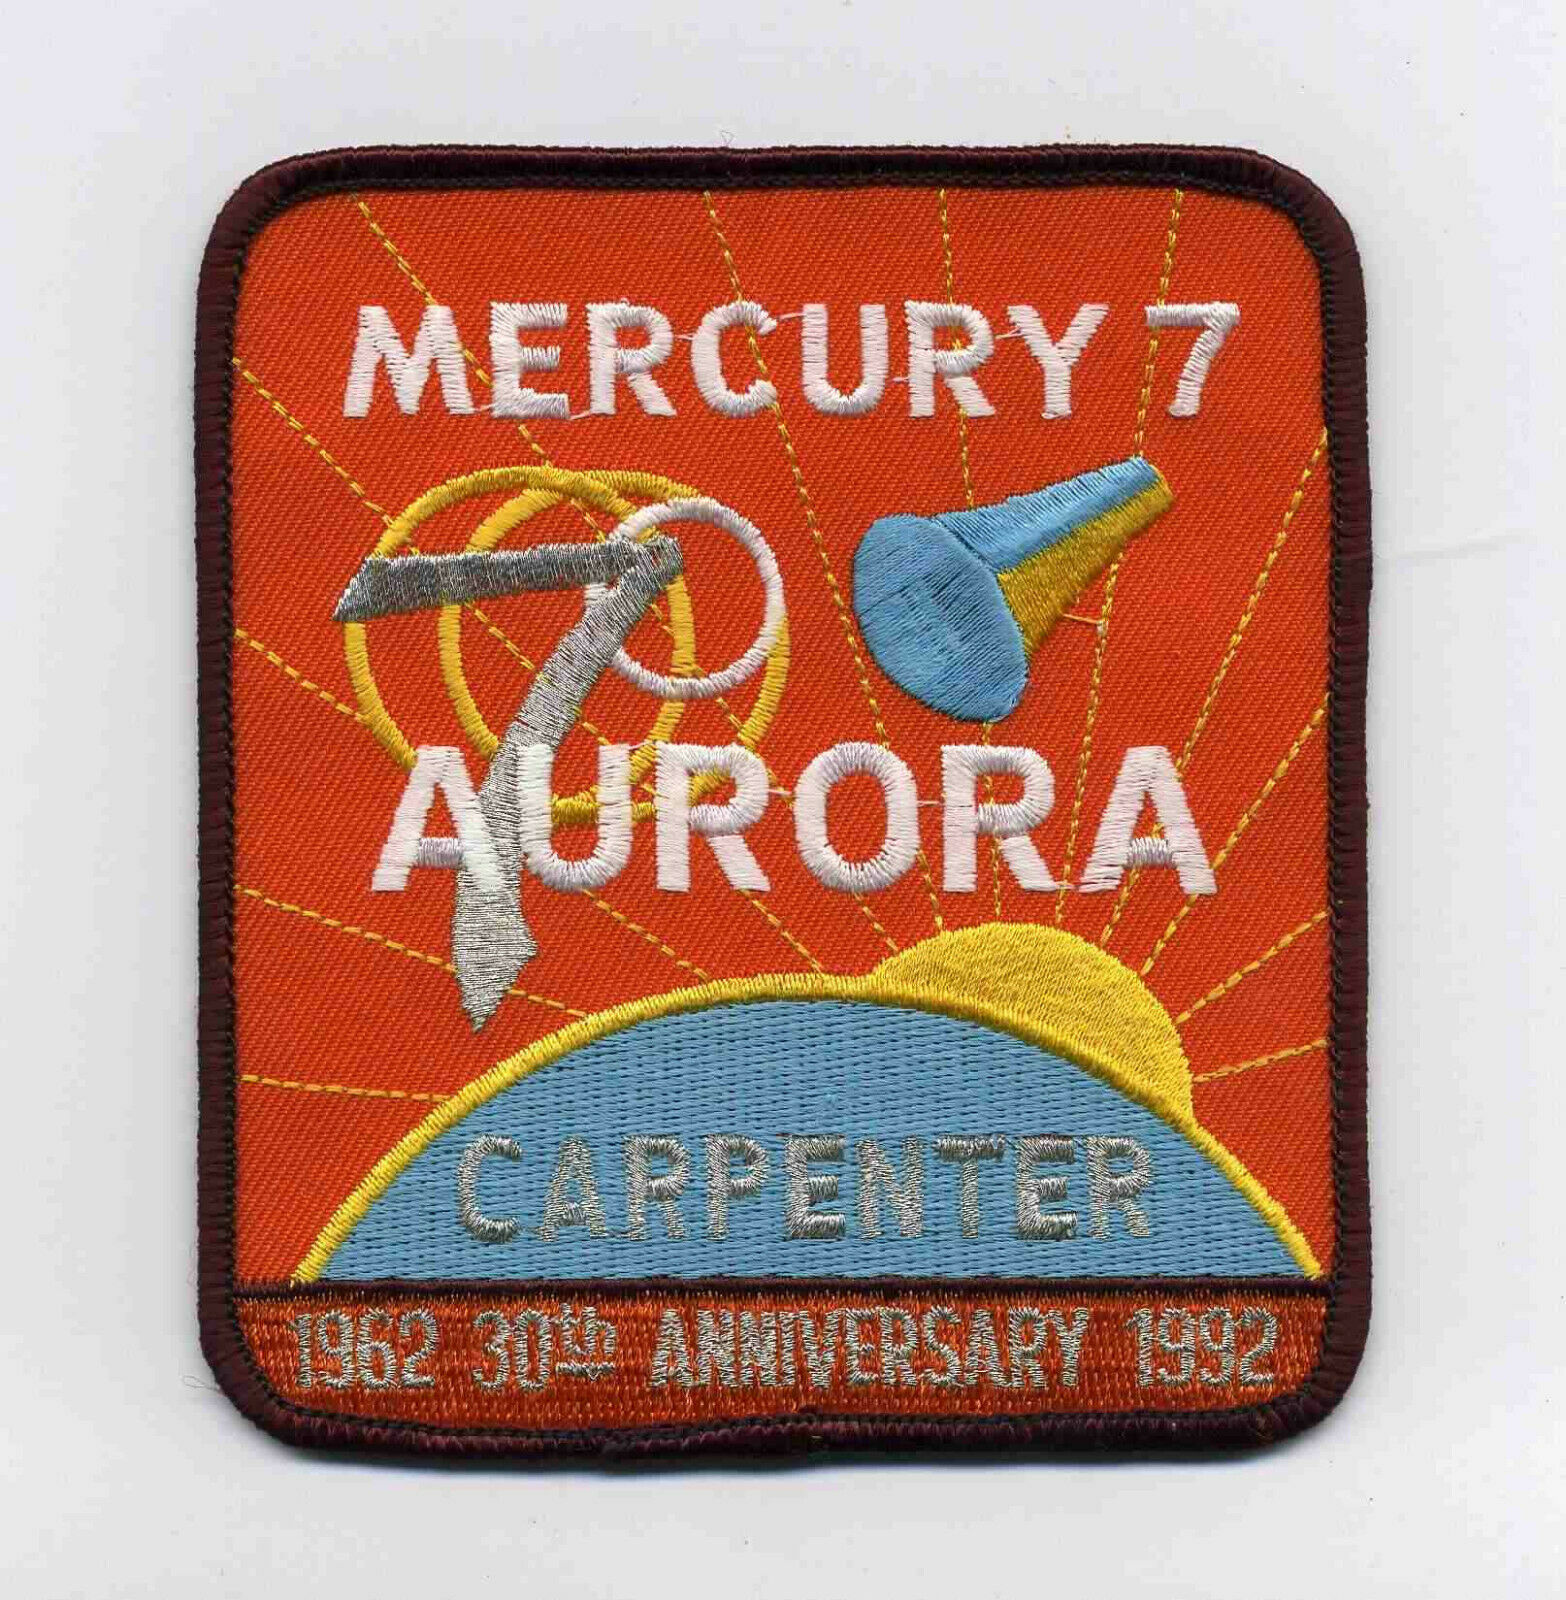 Nasa - Scott Carpenter Mercury 7 - Aurora 7 - 30th Anniversary Embroidered Patch